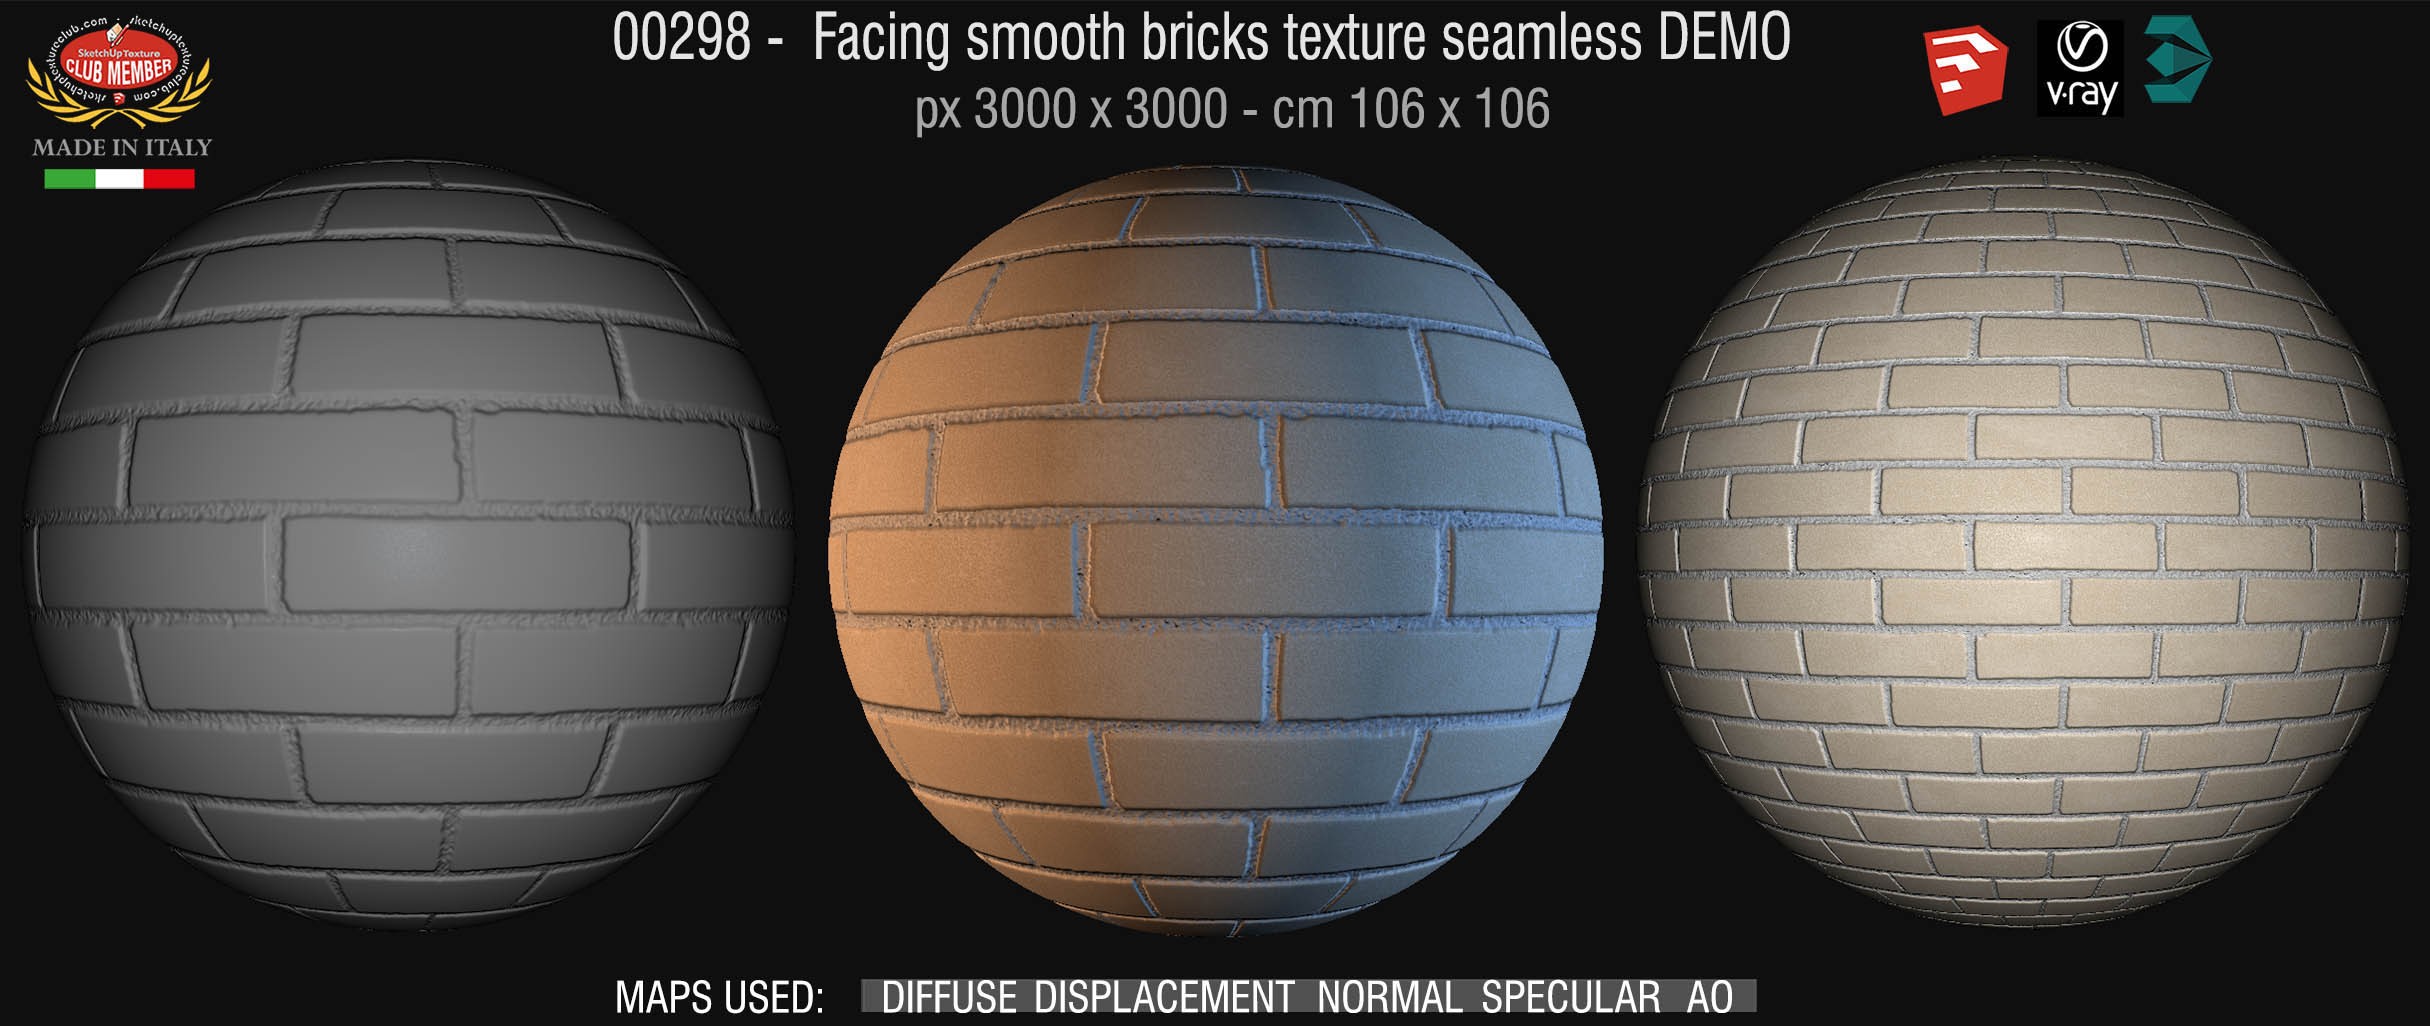 00298 Facing smooth bricks texture seamless + maps DEMO